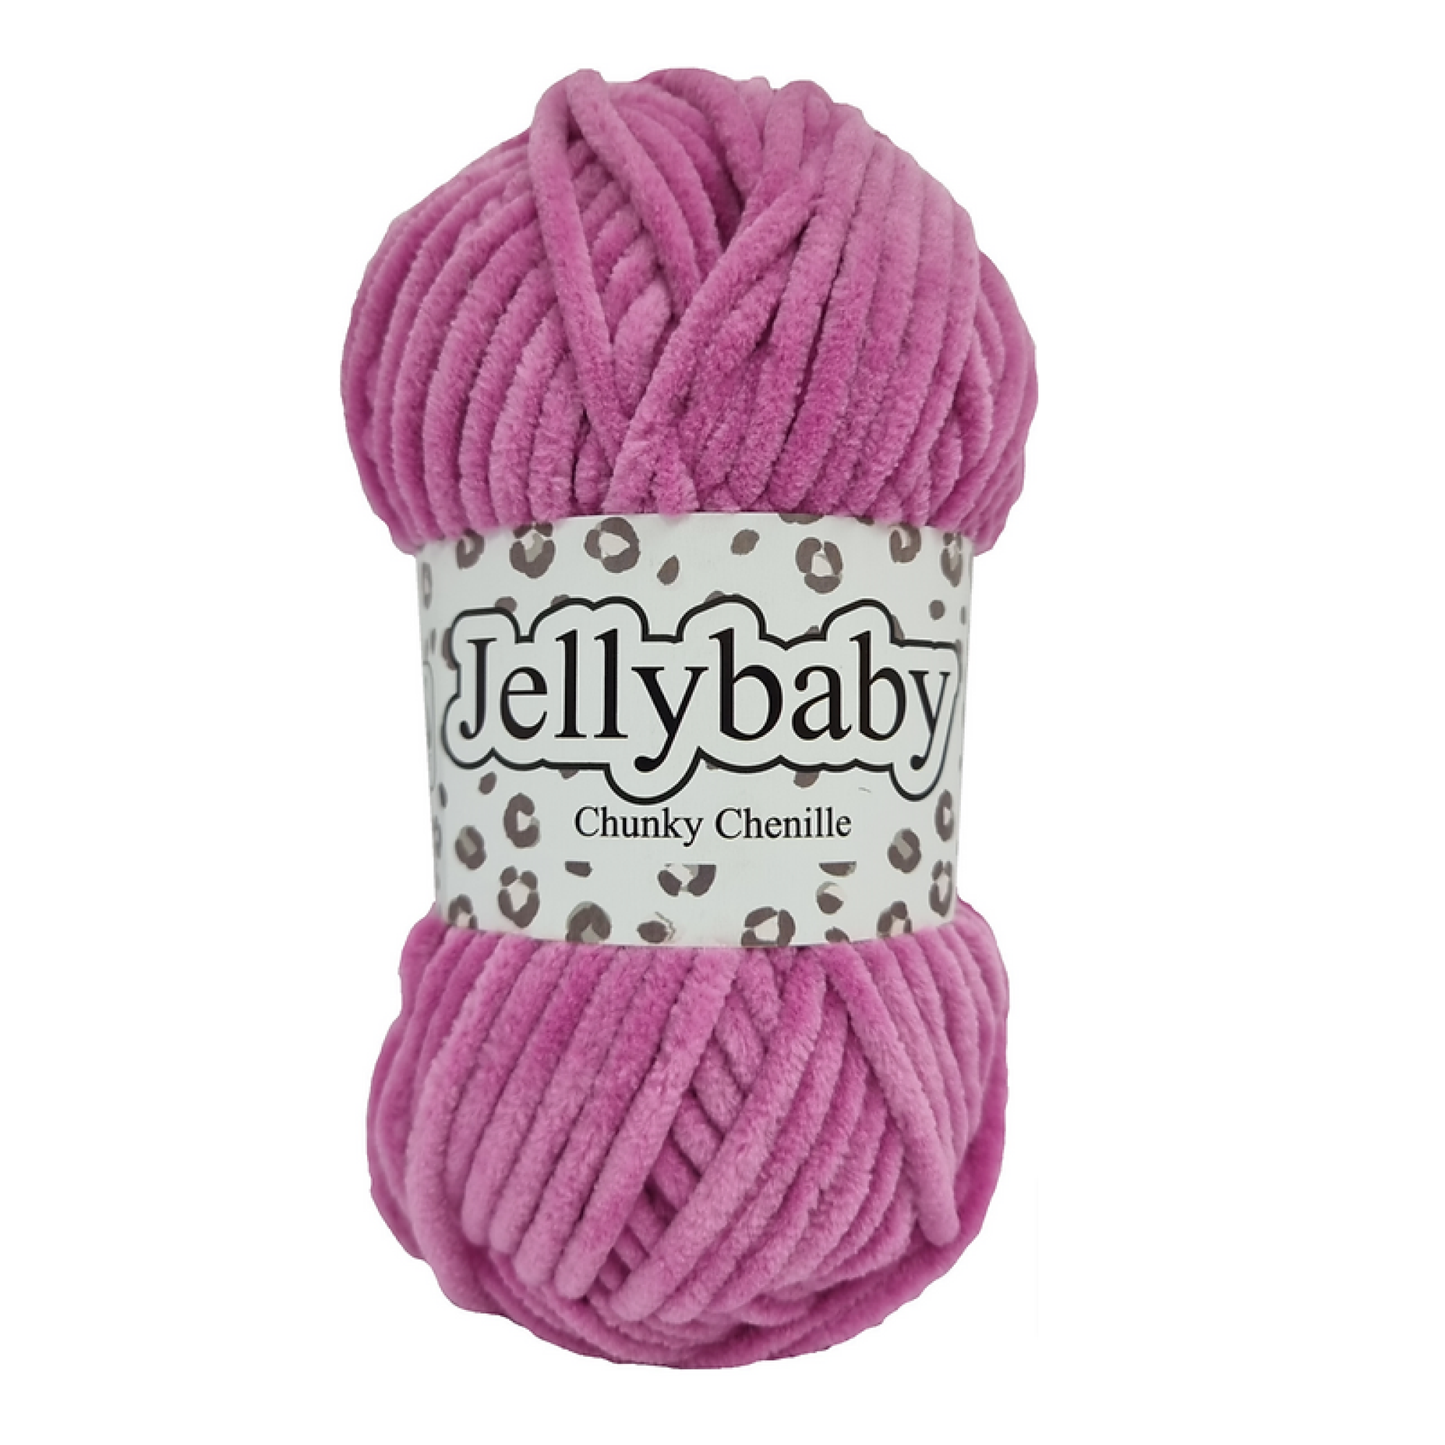 Cygnet Yarns - Jellybaby Chenille - Chunky - 100g Ball - 016 Bubblegum